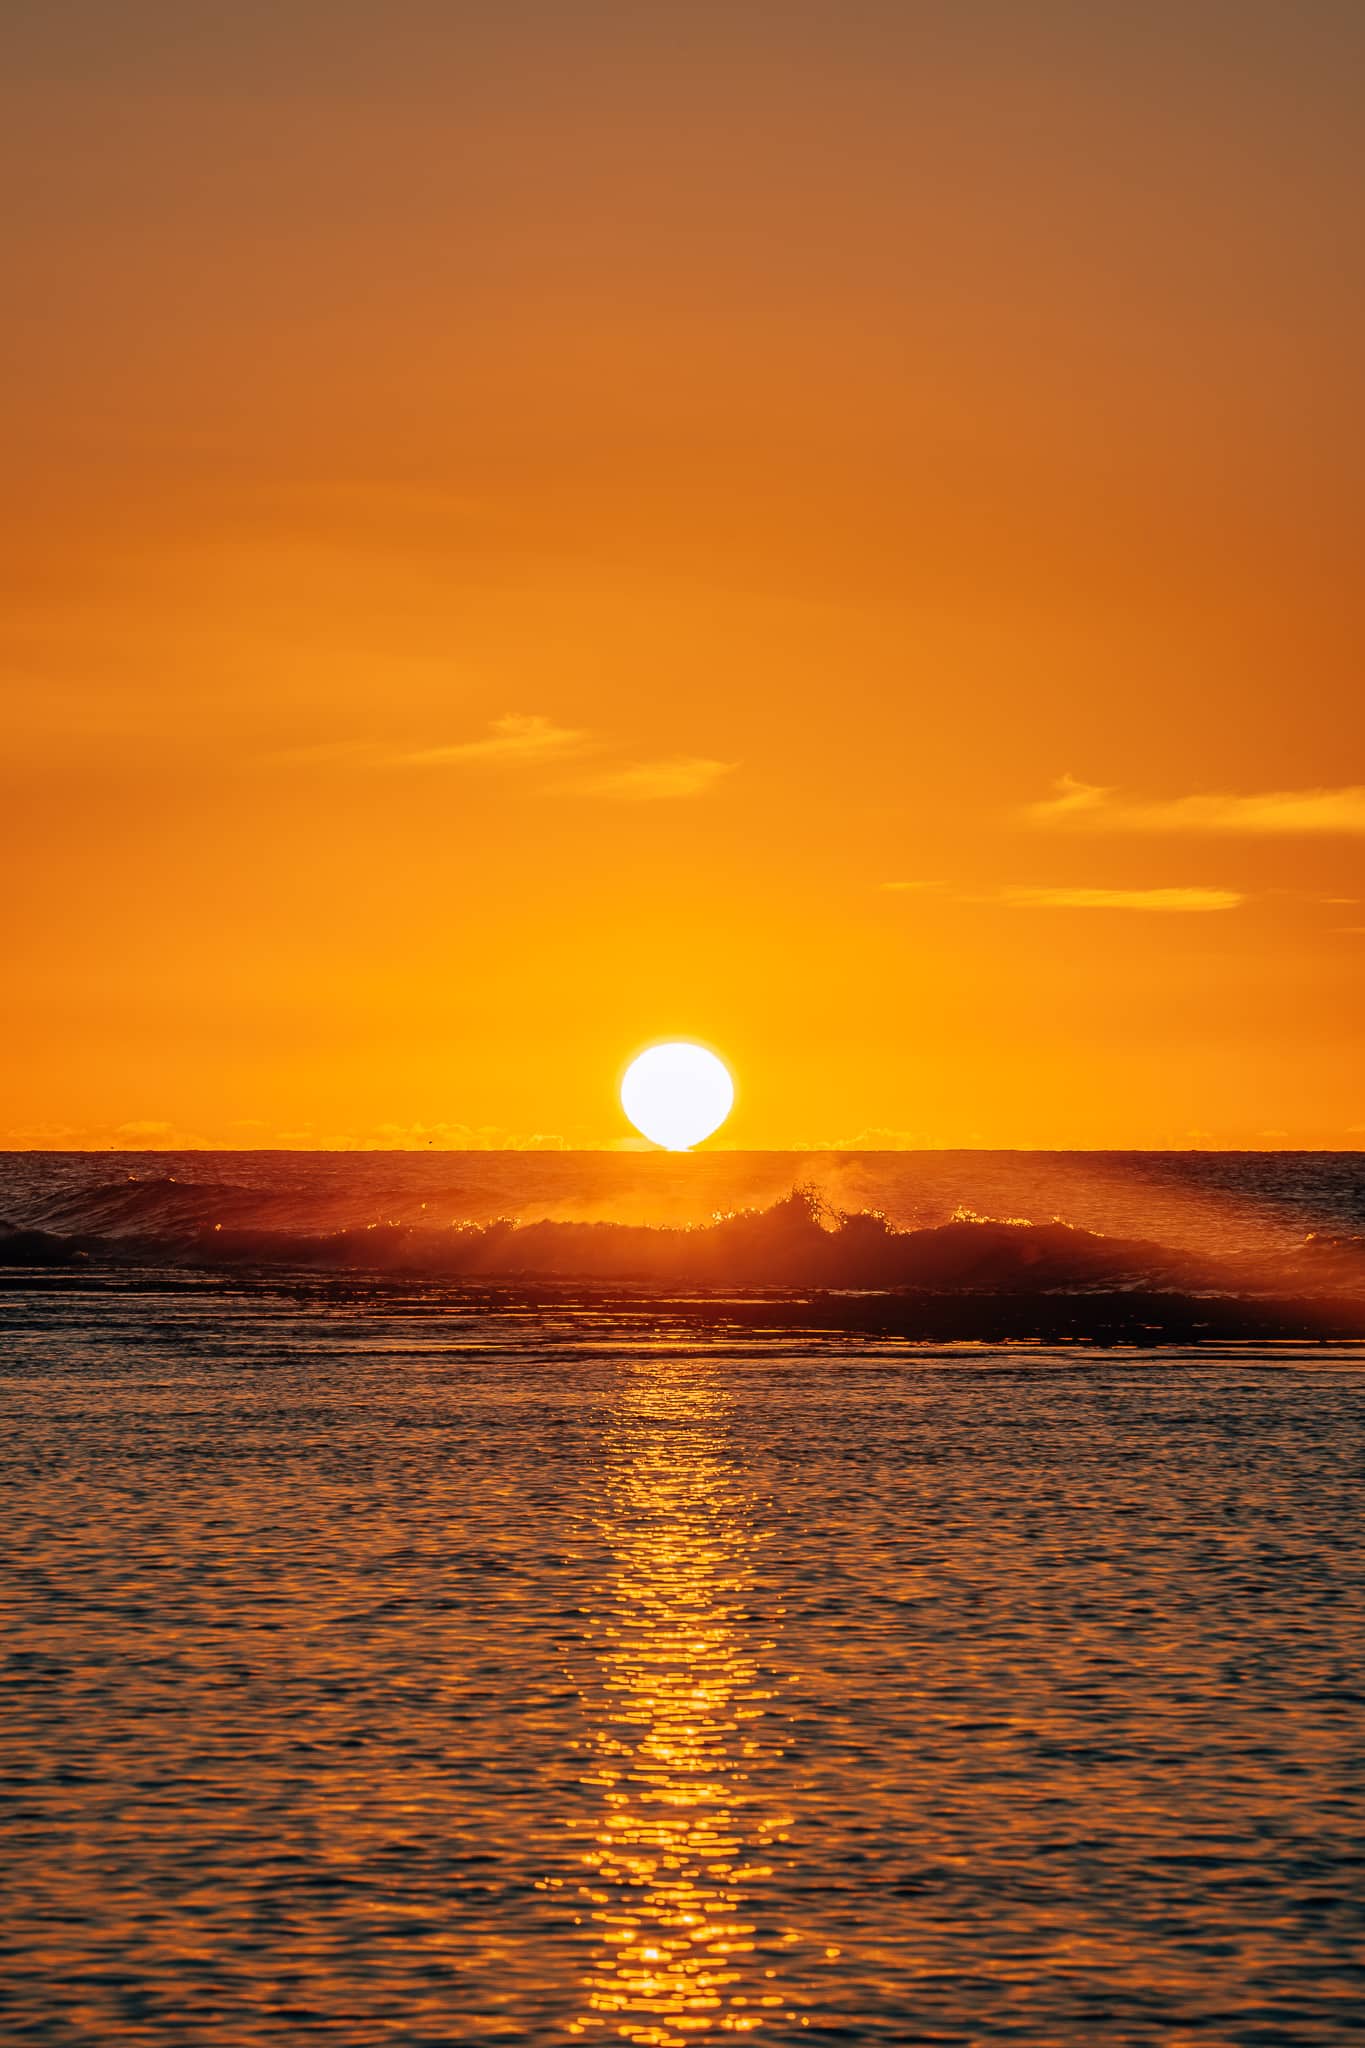 Sun touching the horizon above the ocean